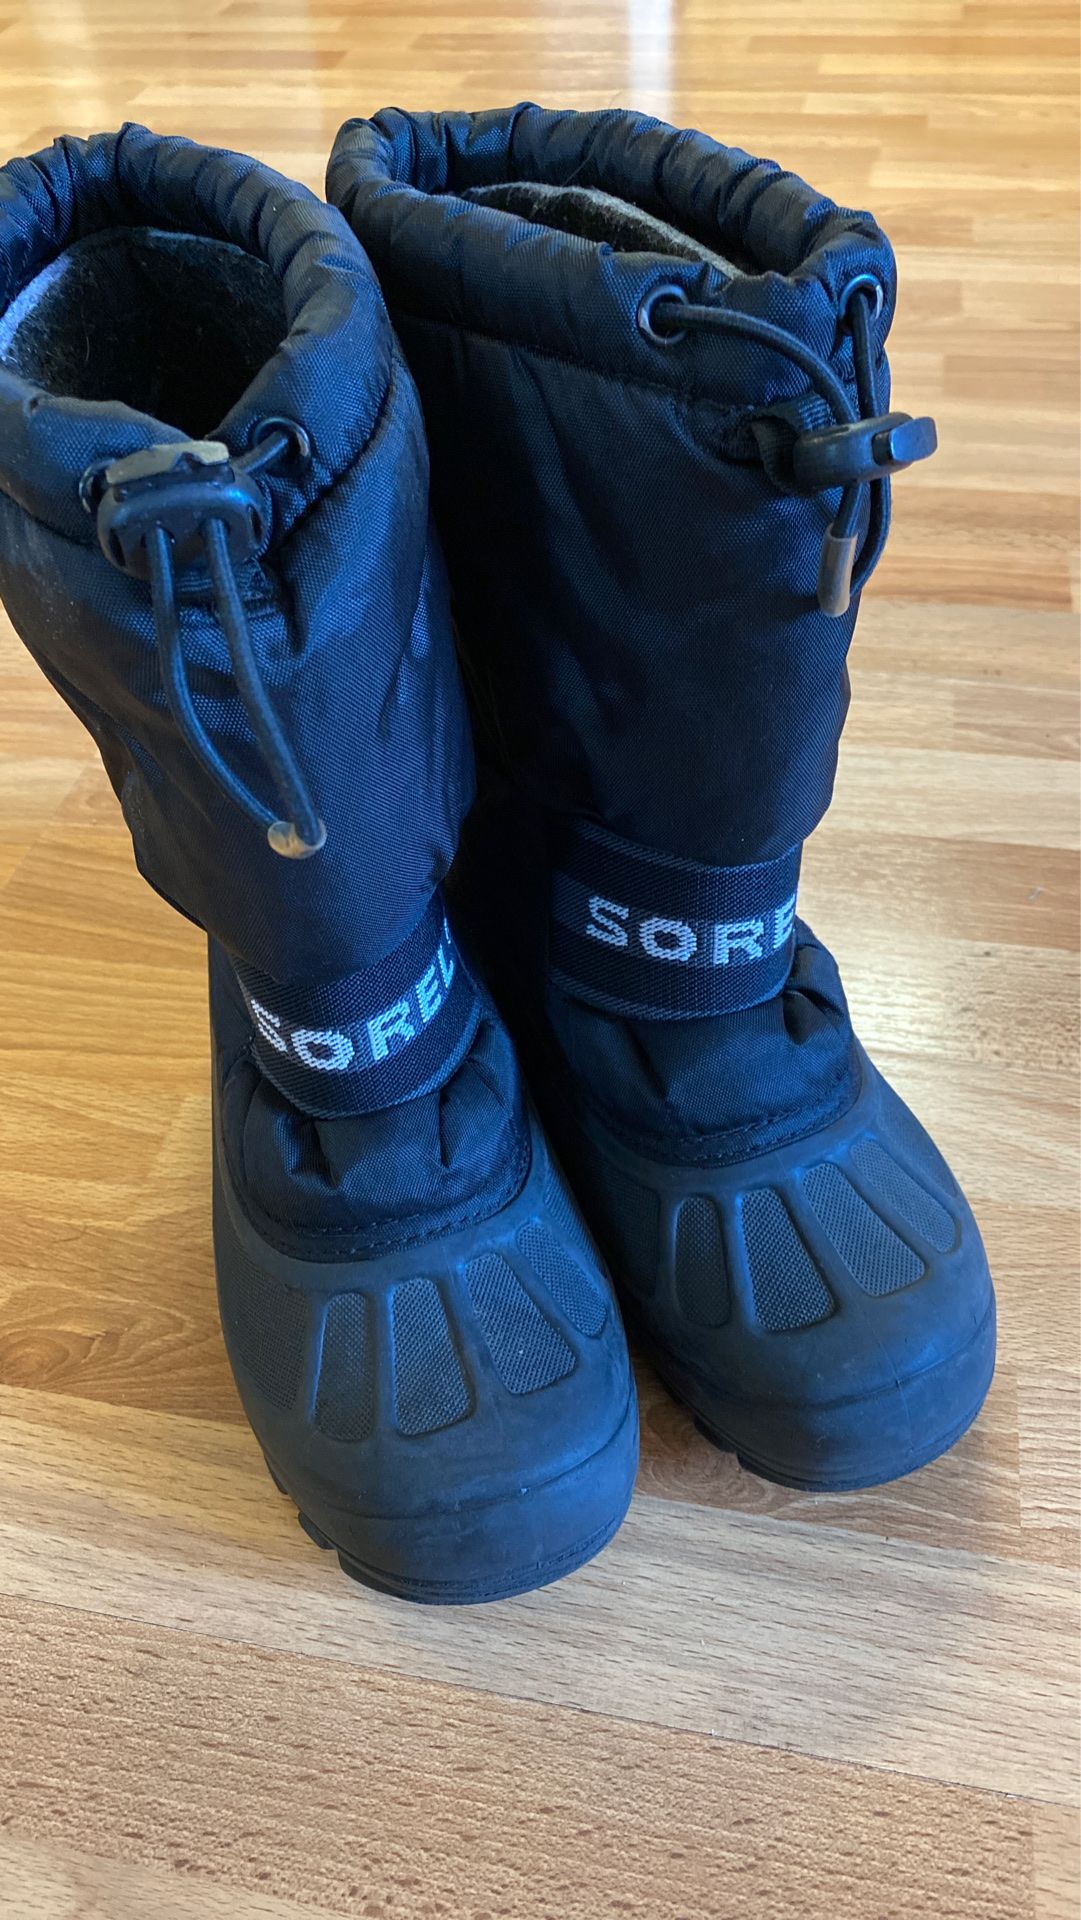 Sorel Snow Boots kid size 13 black